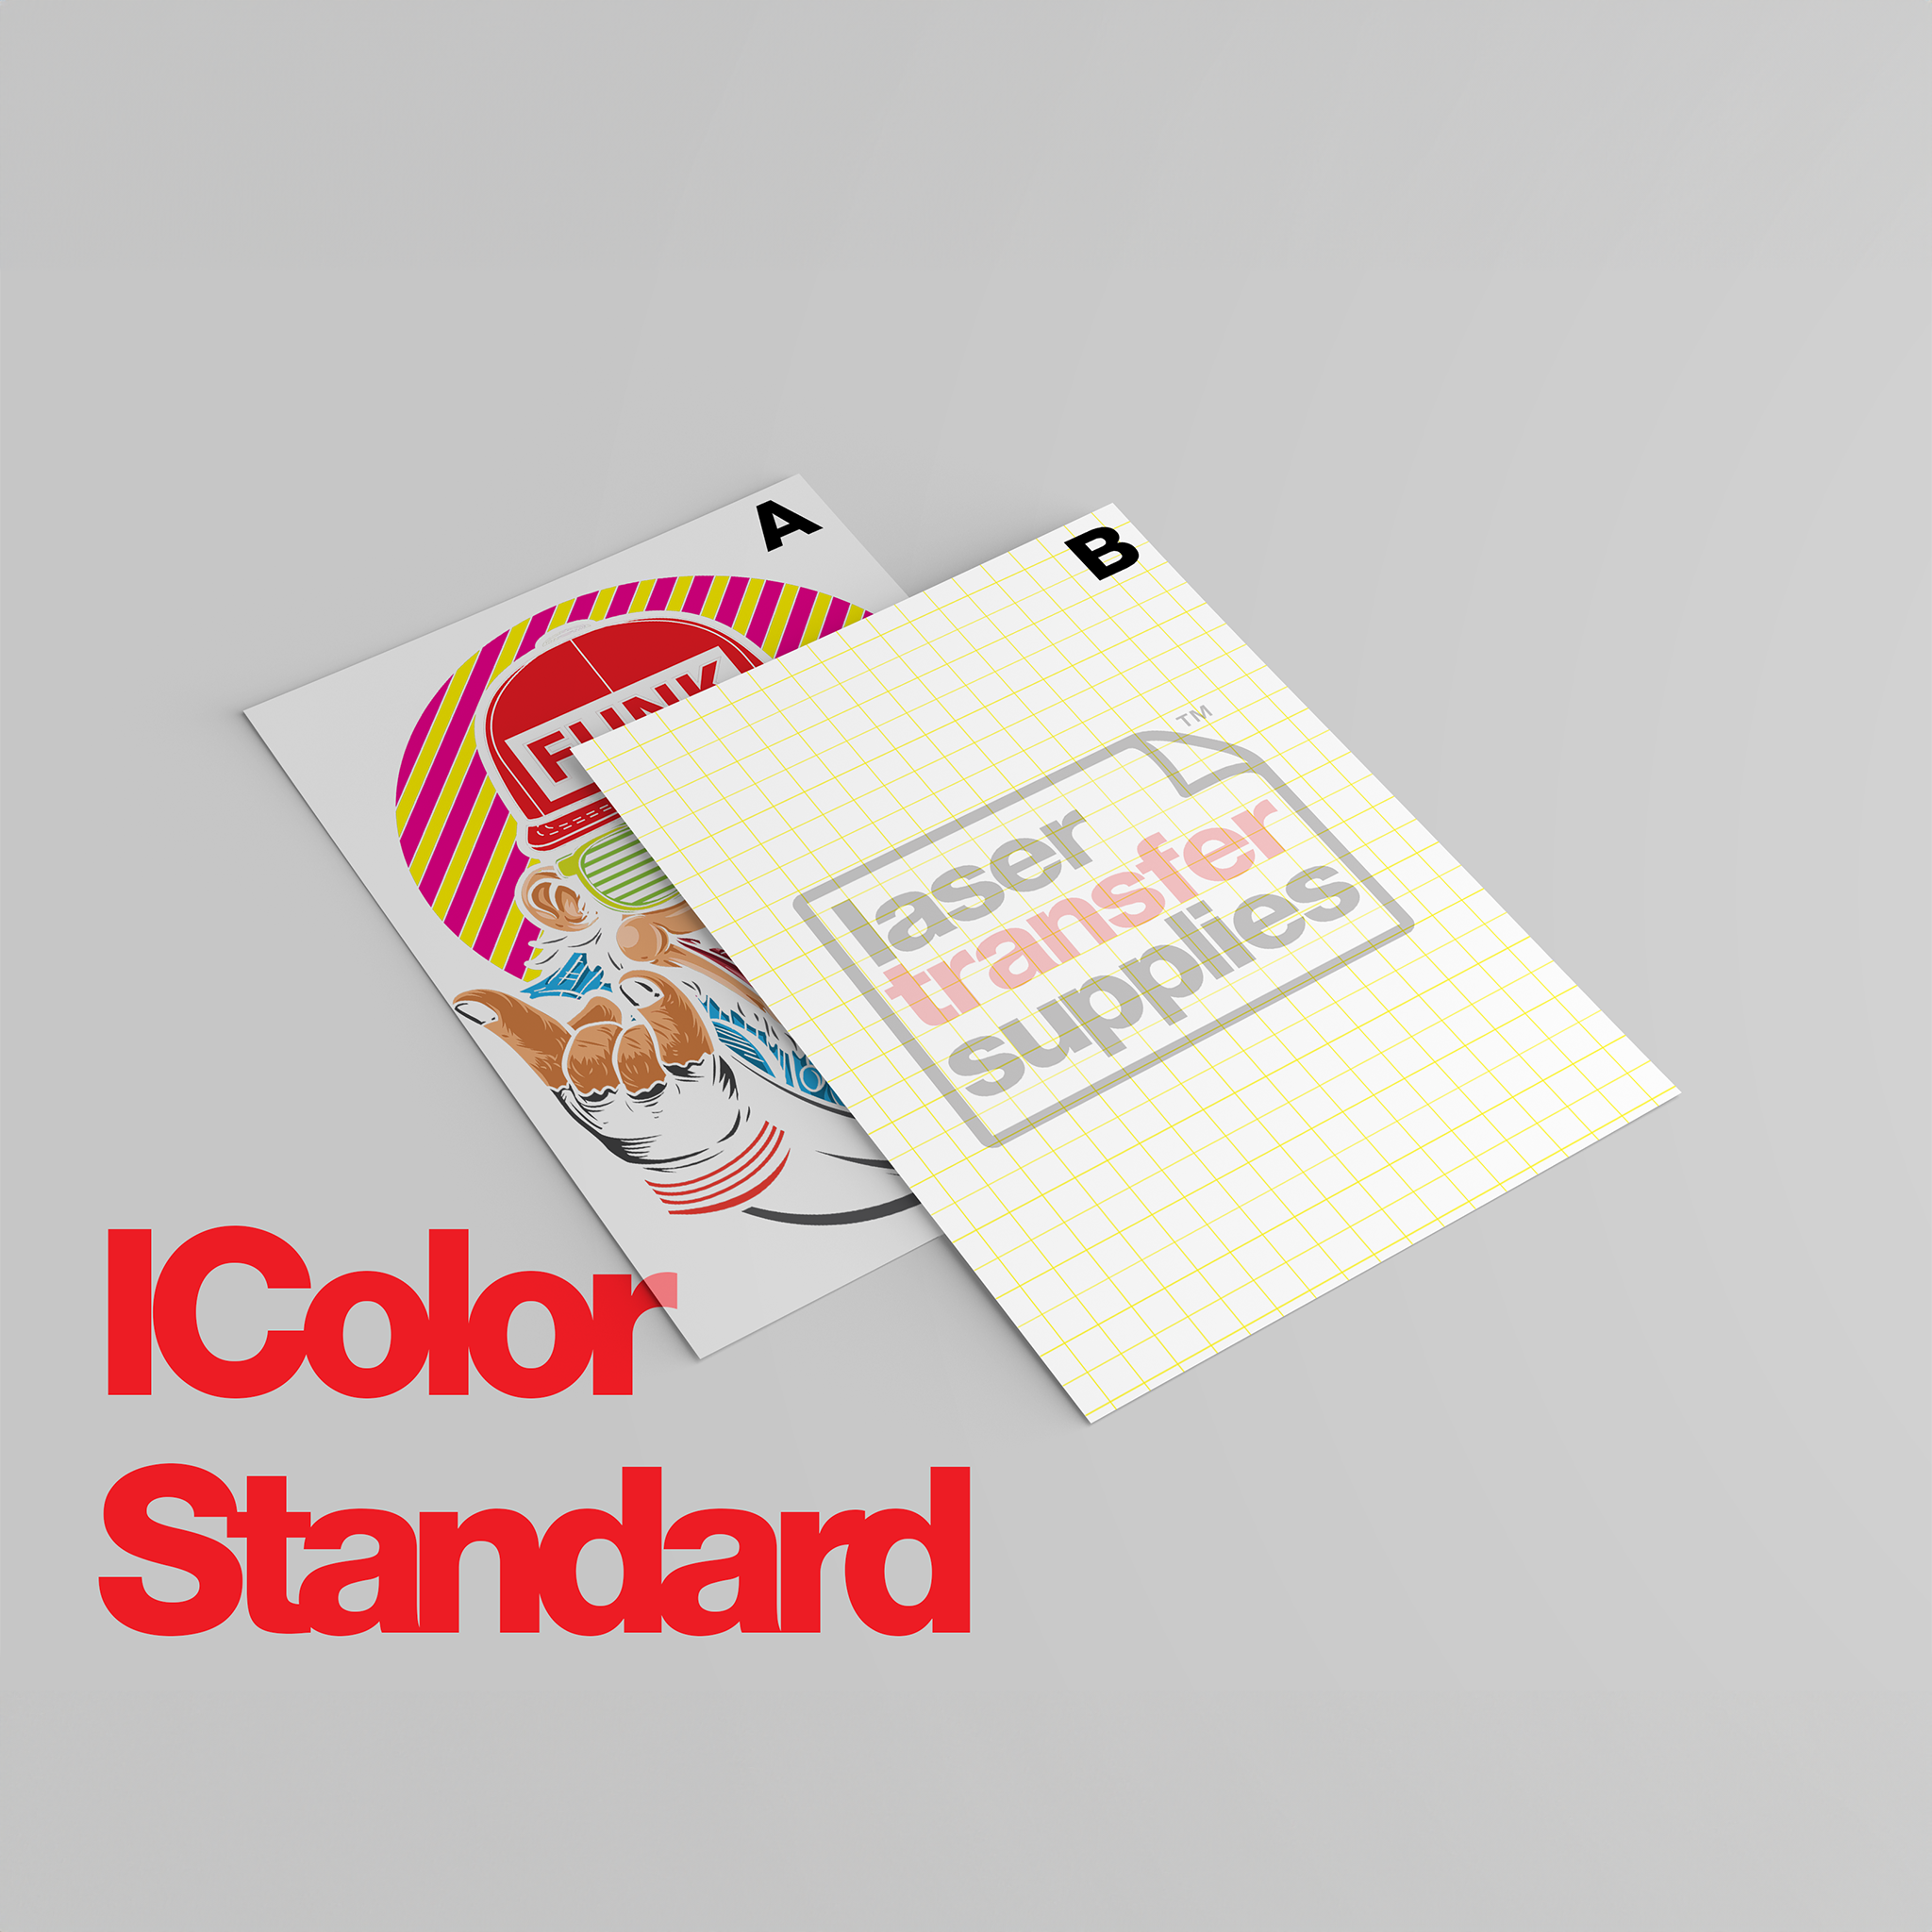 IColor Standard